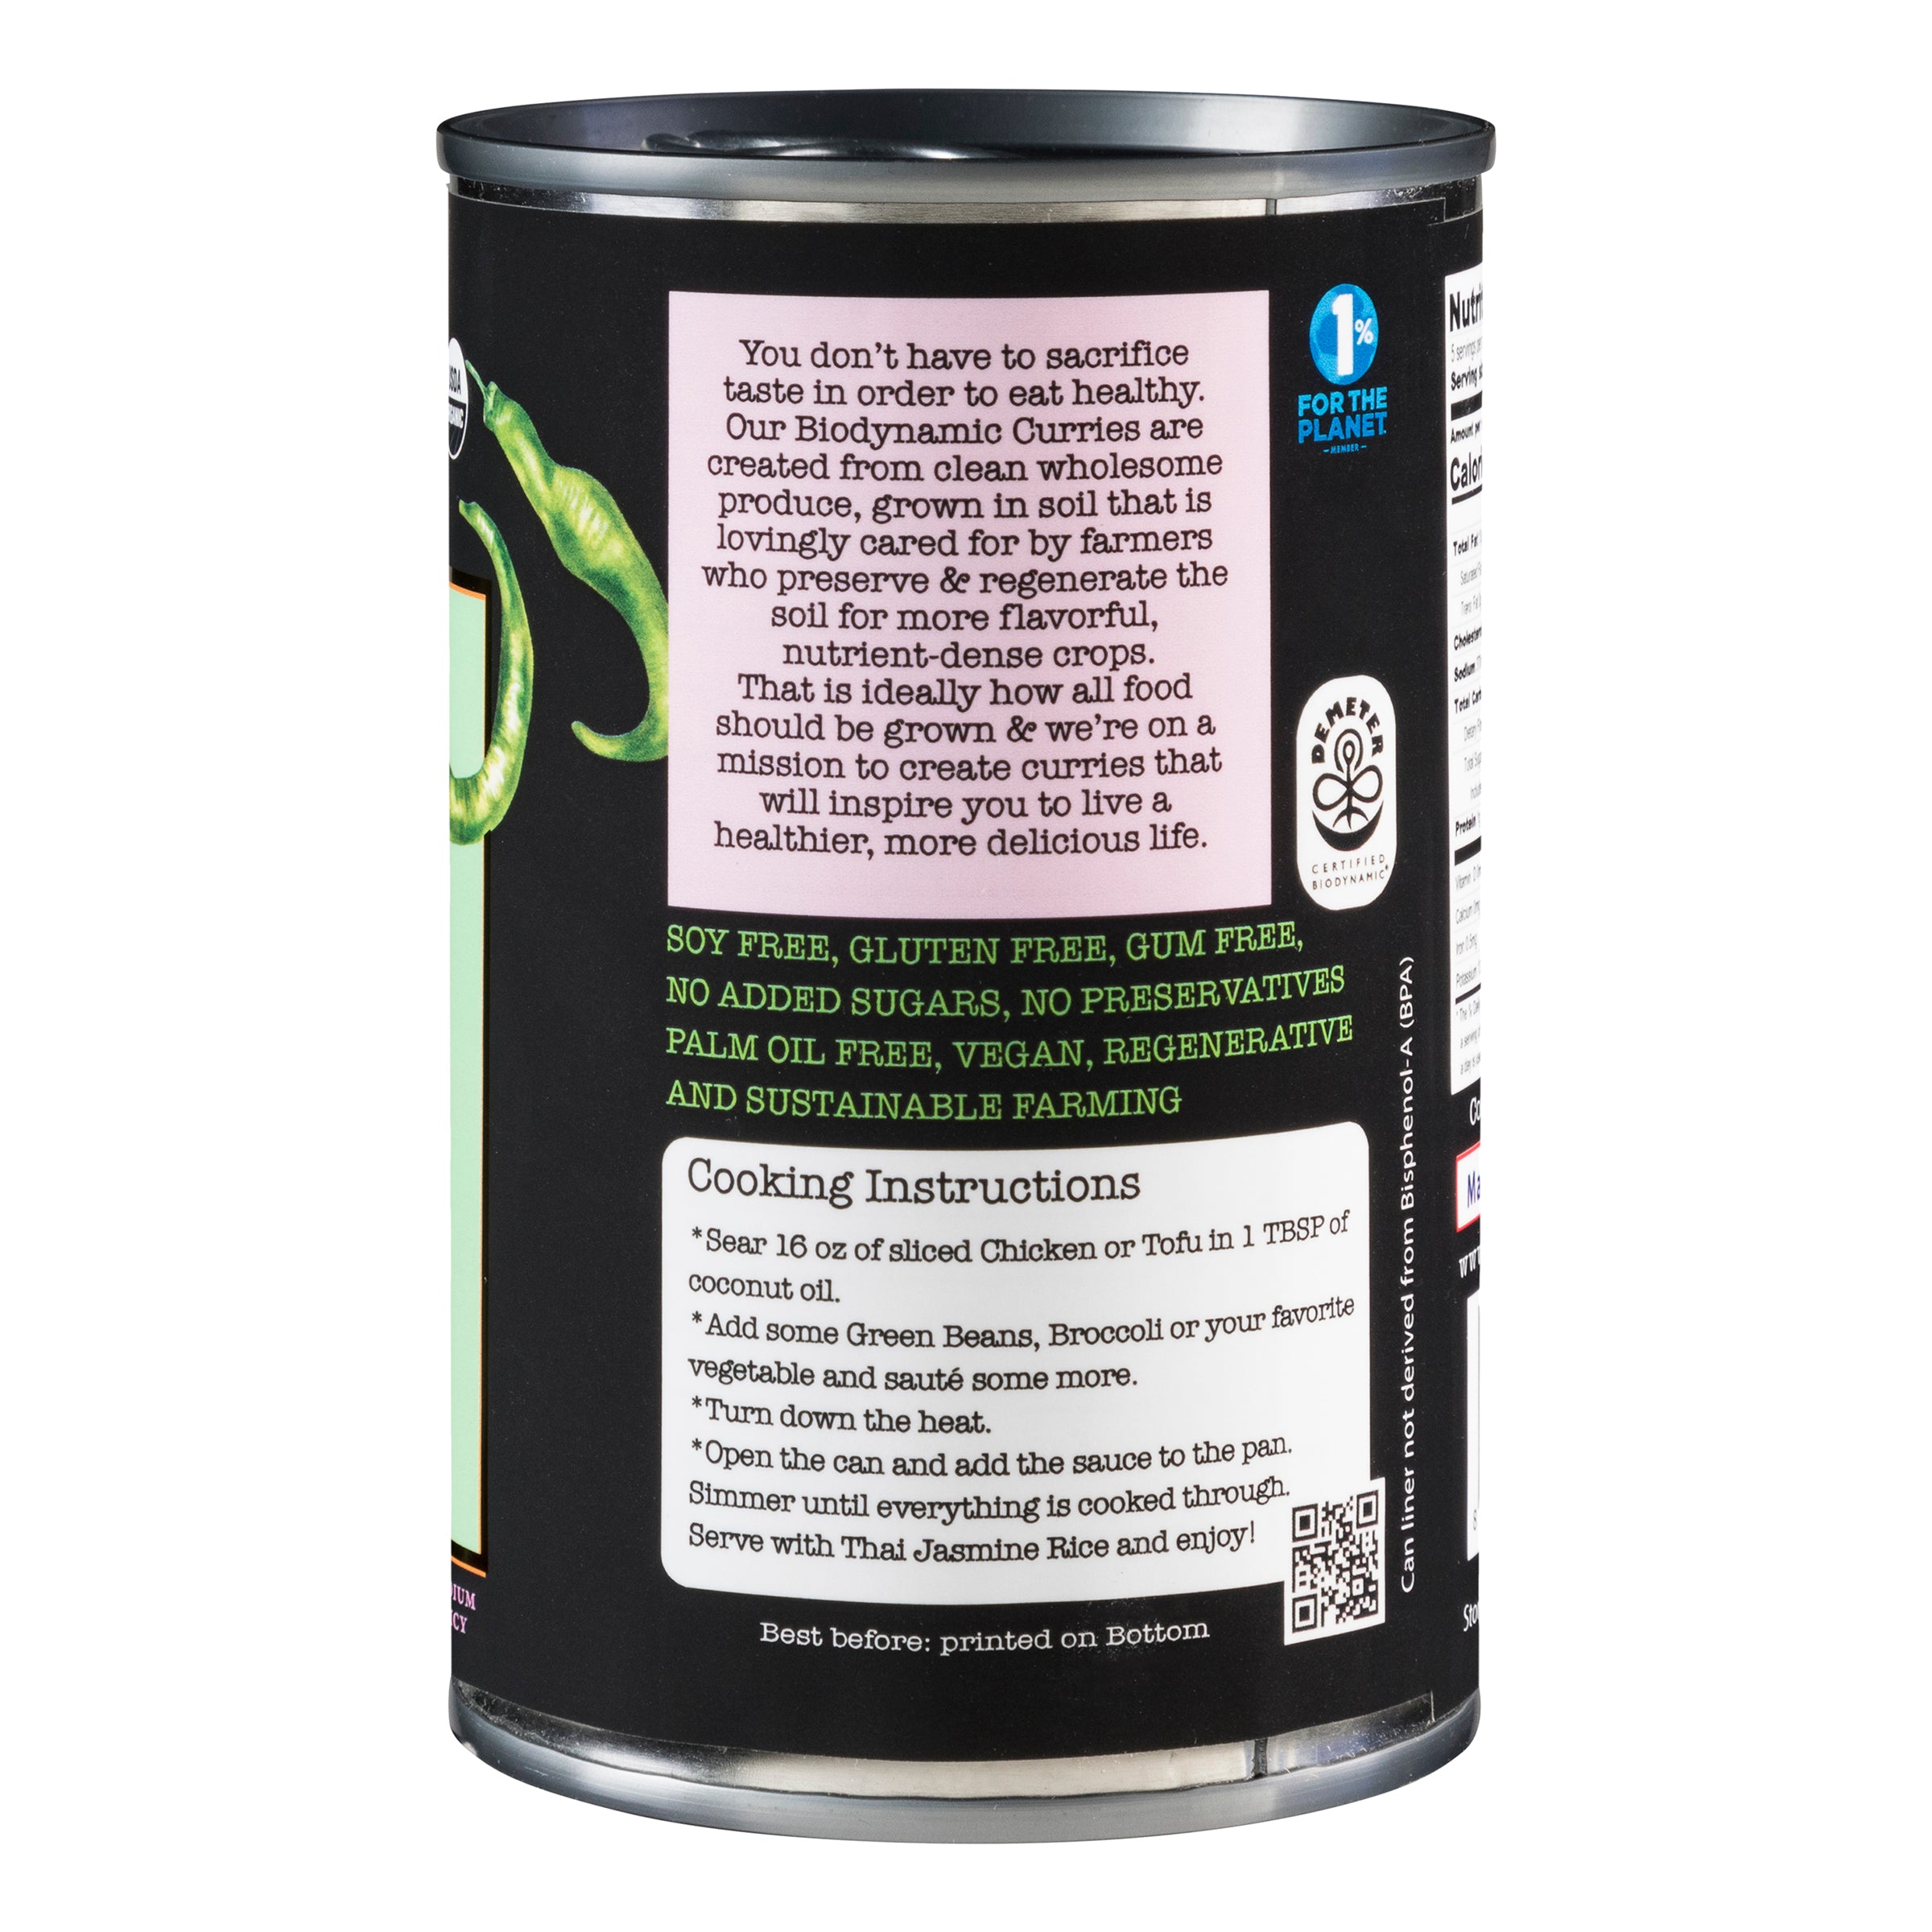 Organic & Biodynamic Green Thai Curry Sauce - 1 x 13.5 fl oz Tin Can